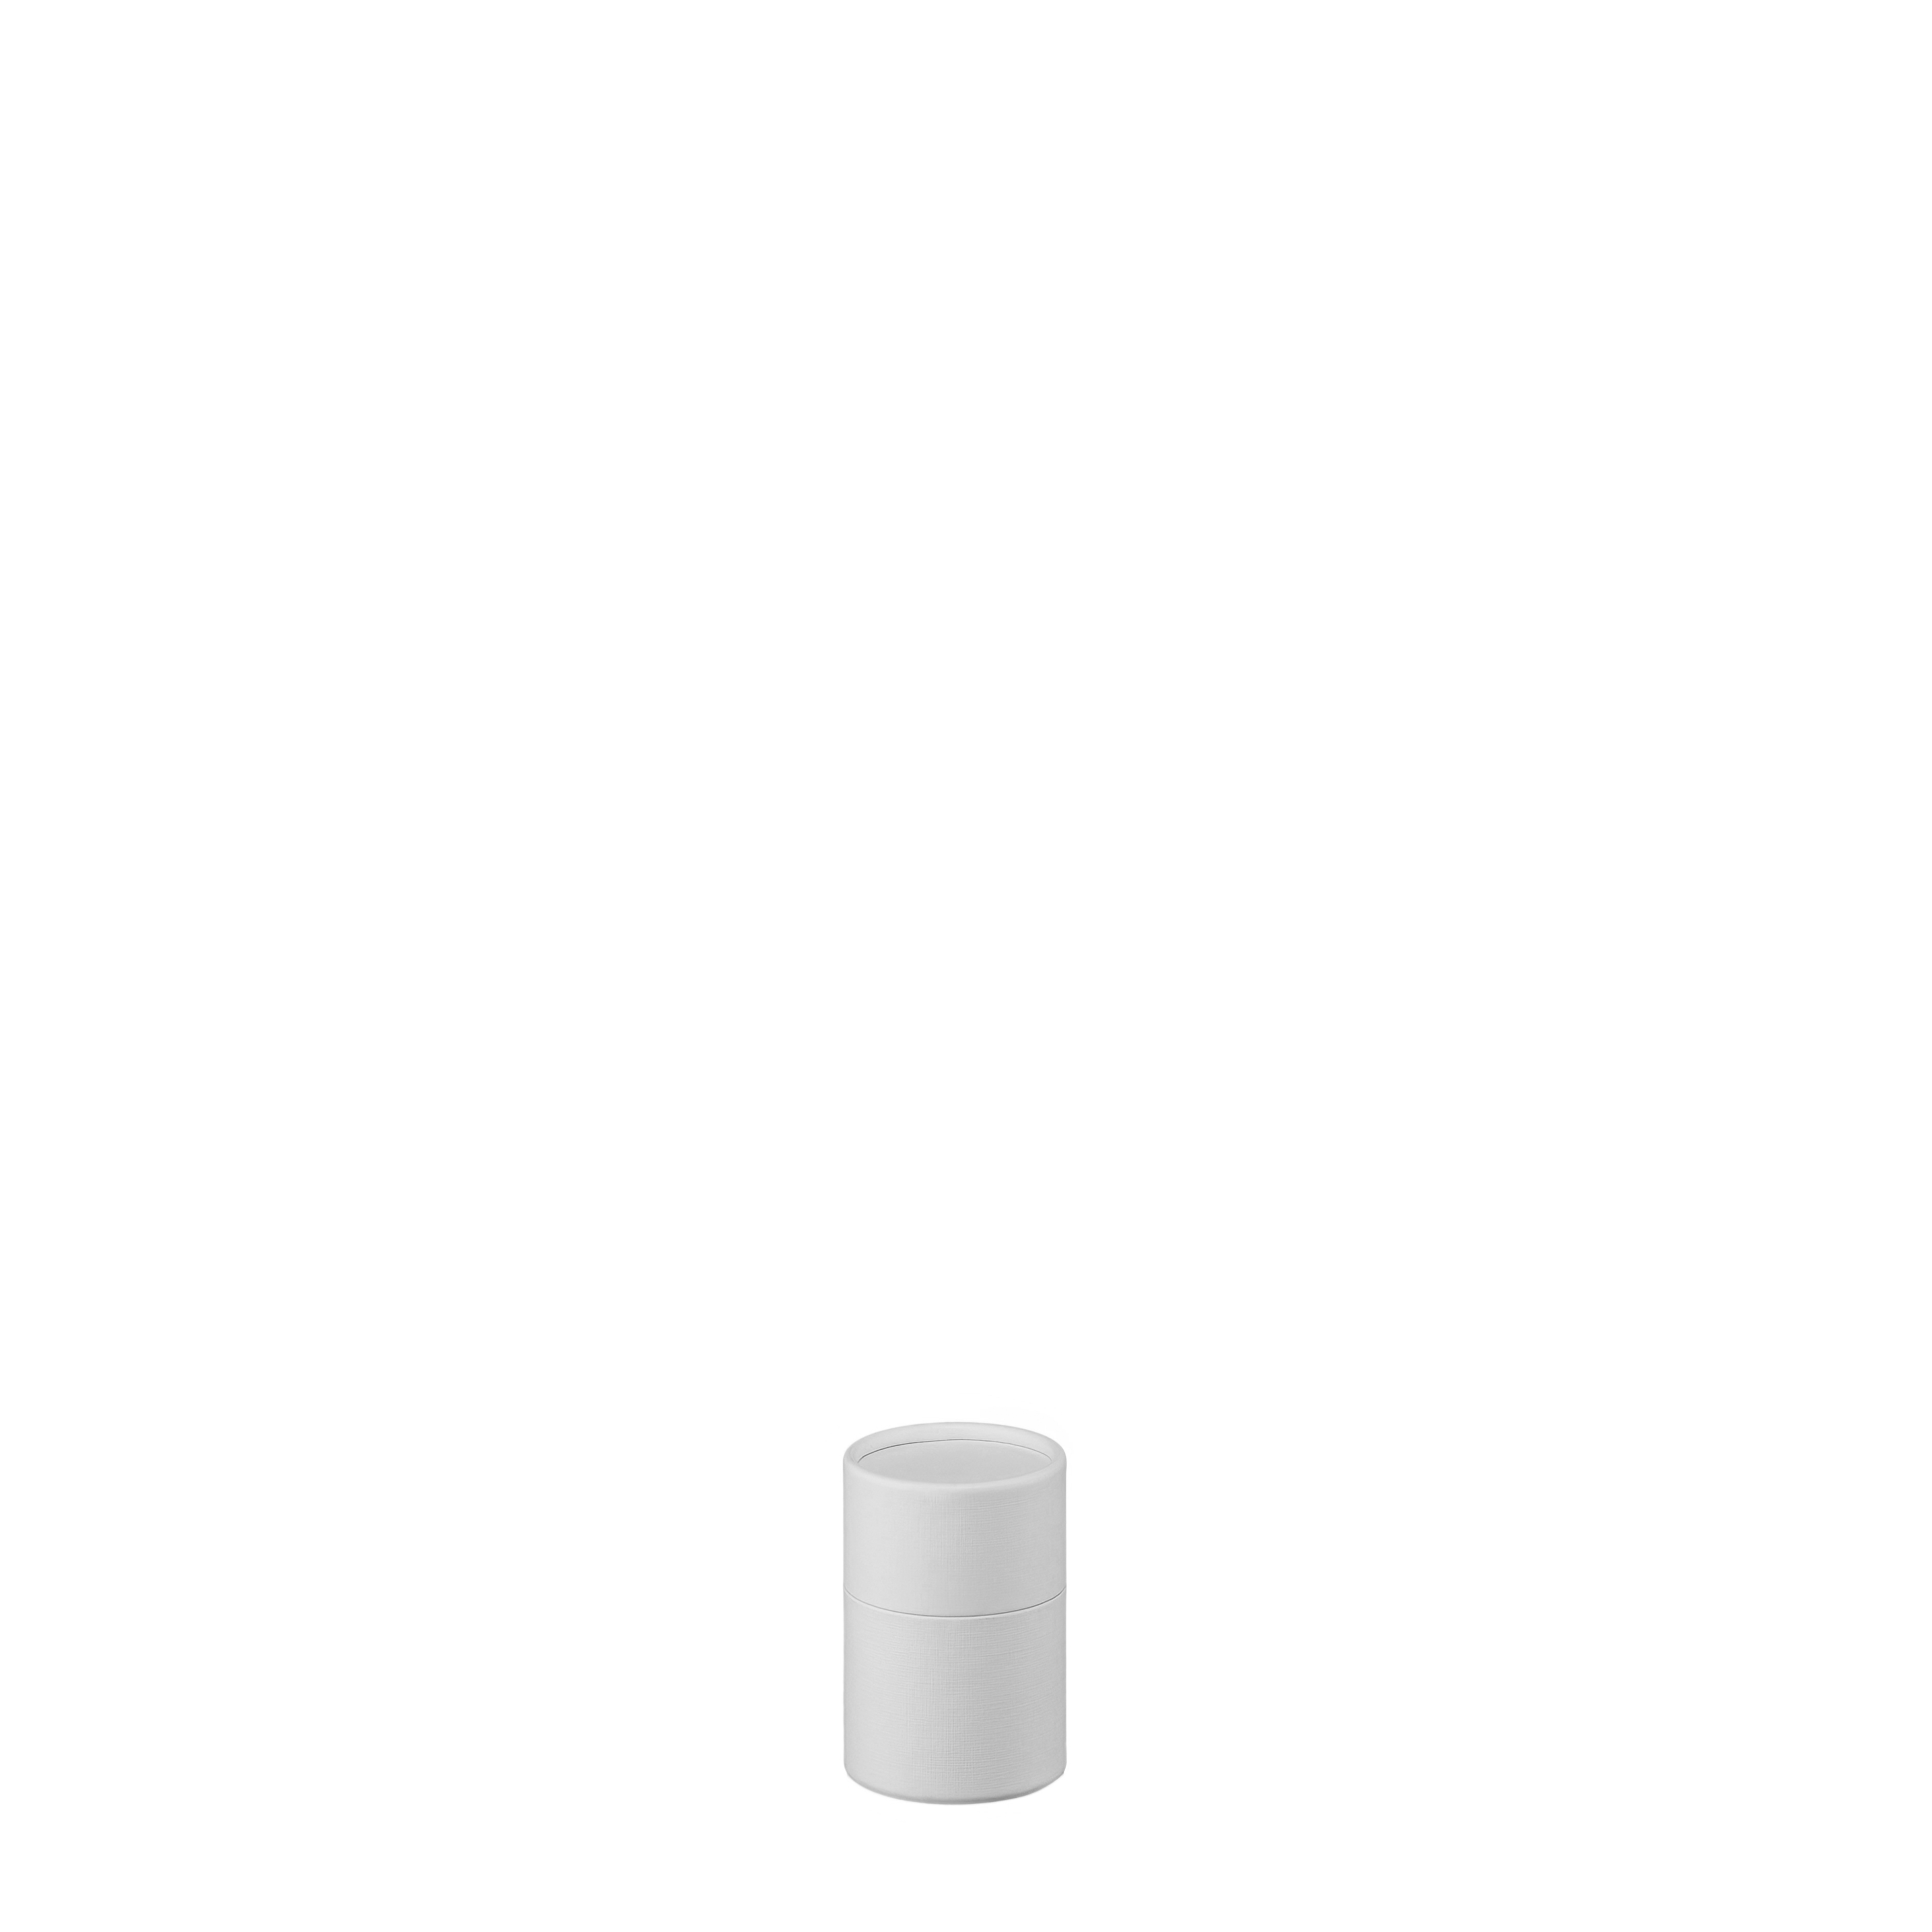 Pappdose weiß | 60 x 45 mm I food grade